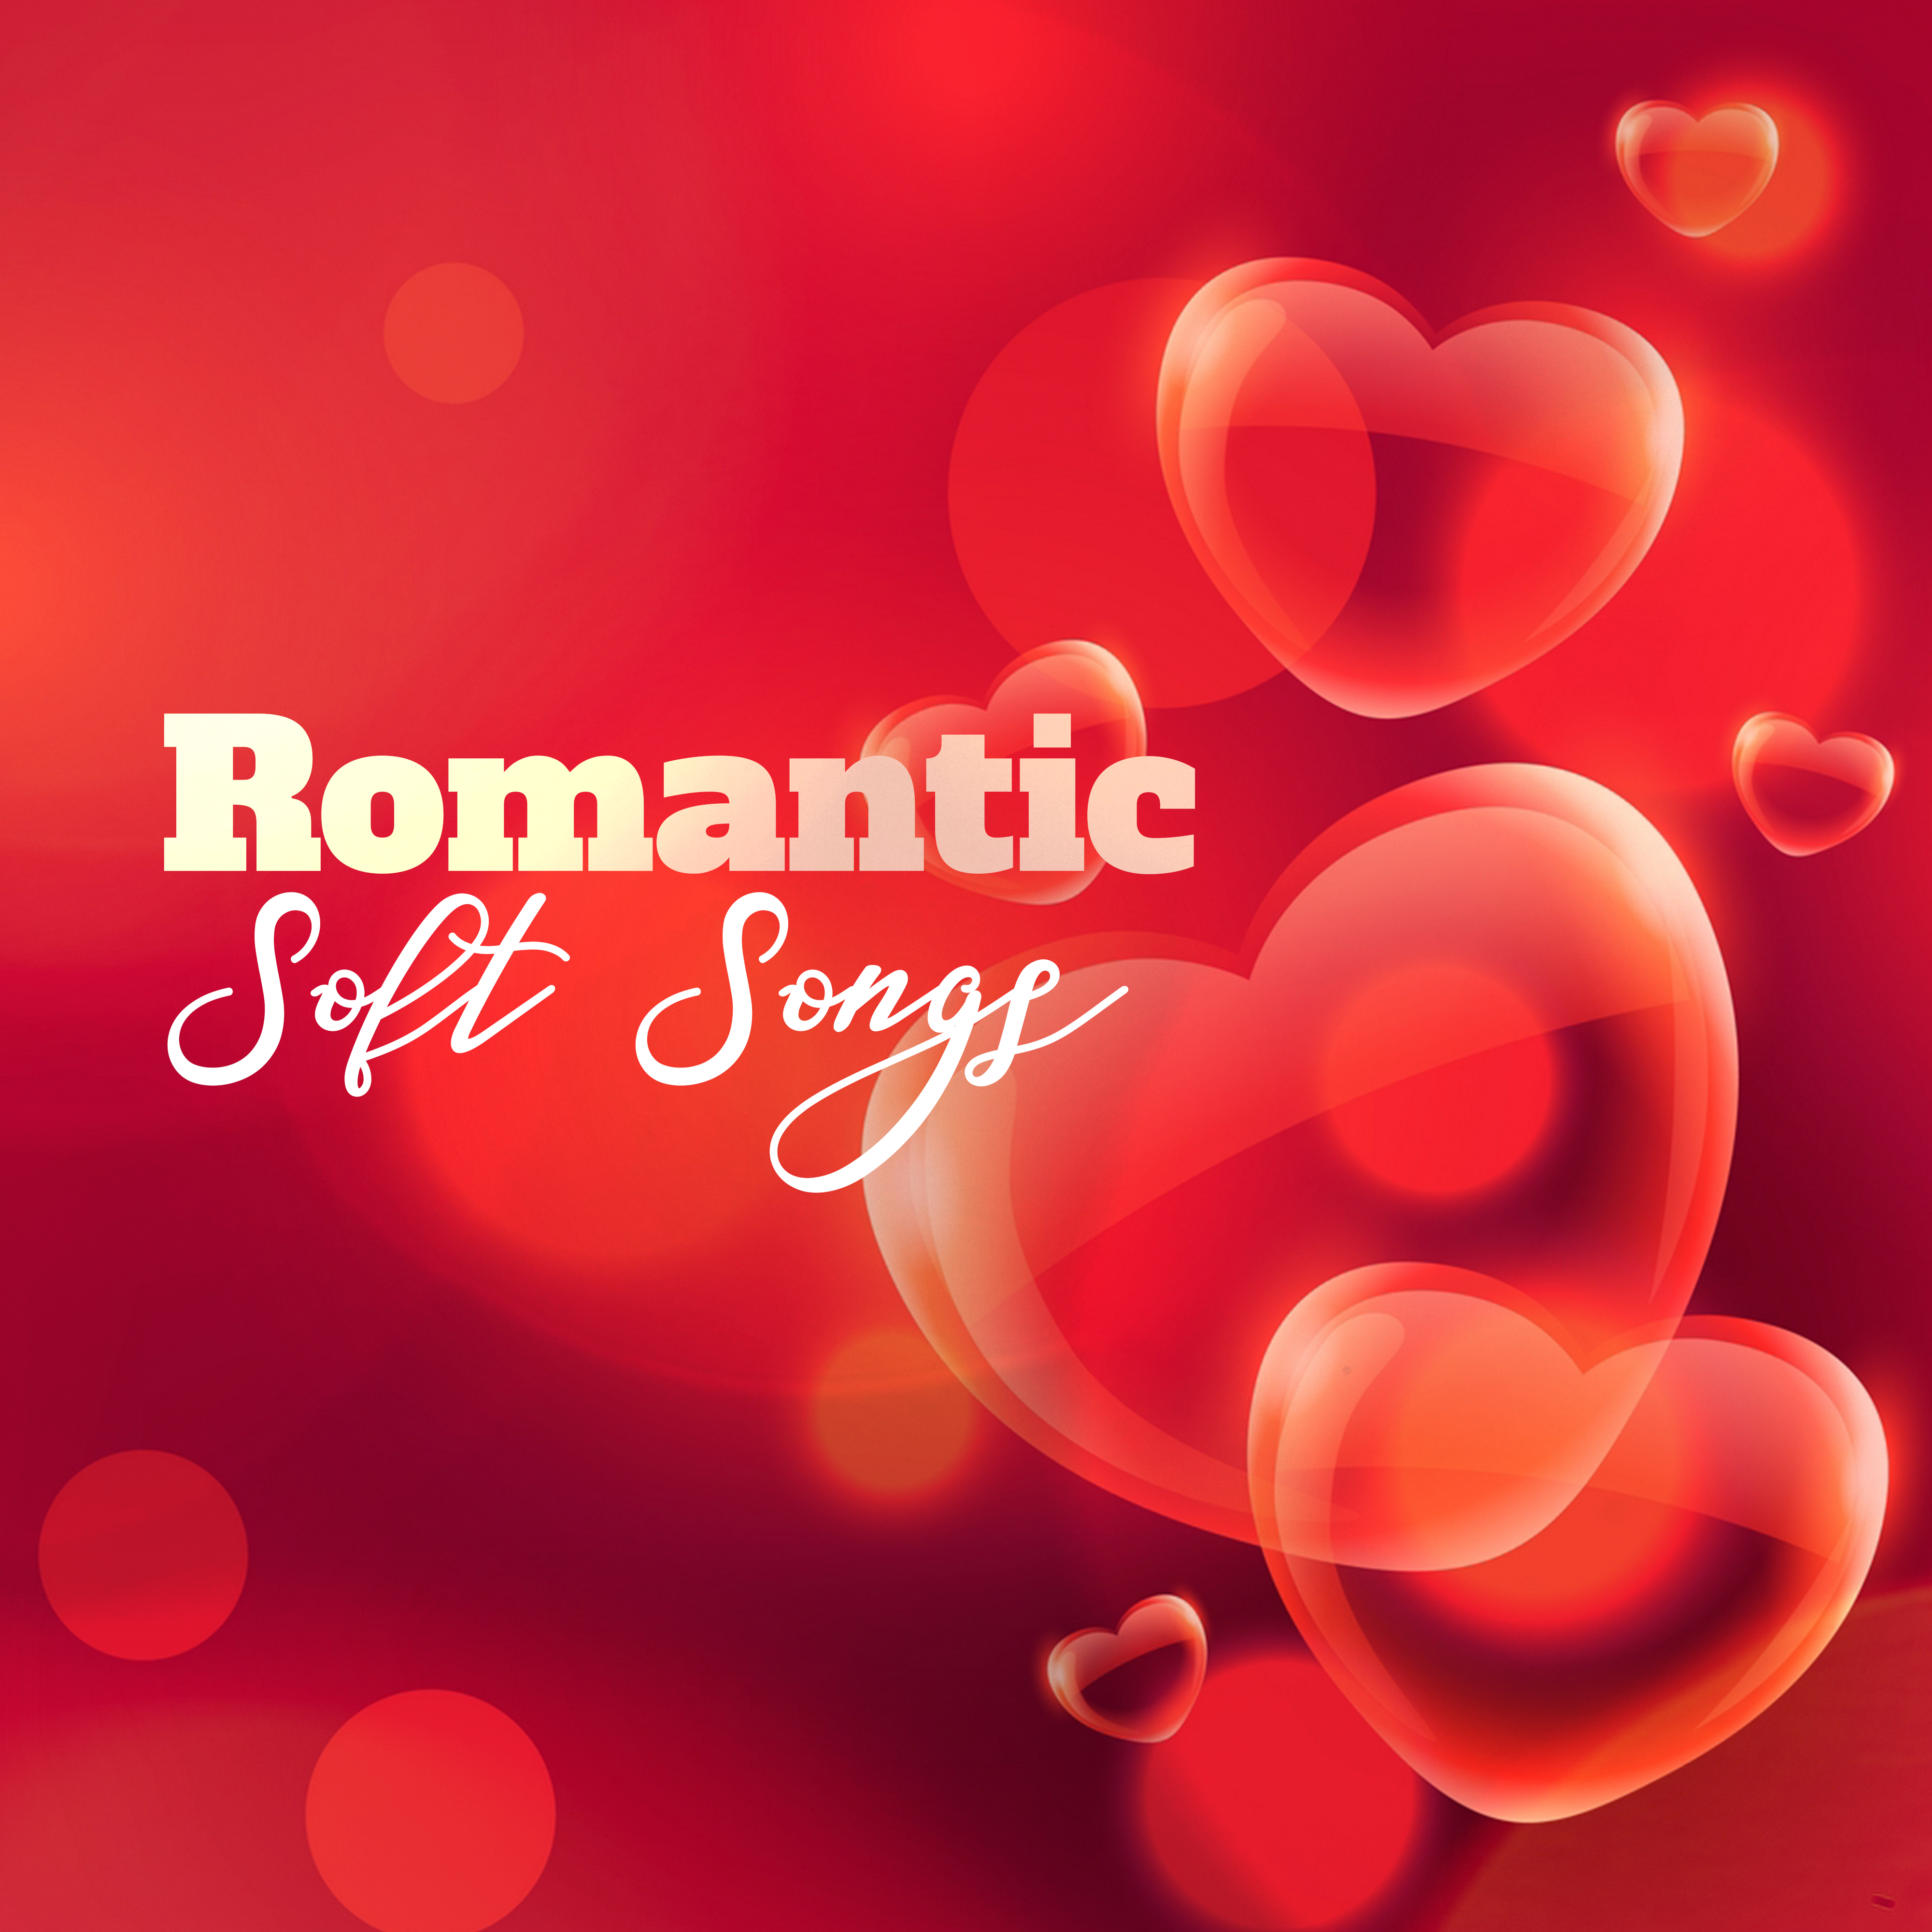 Romantic Soft Songs